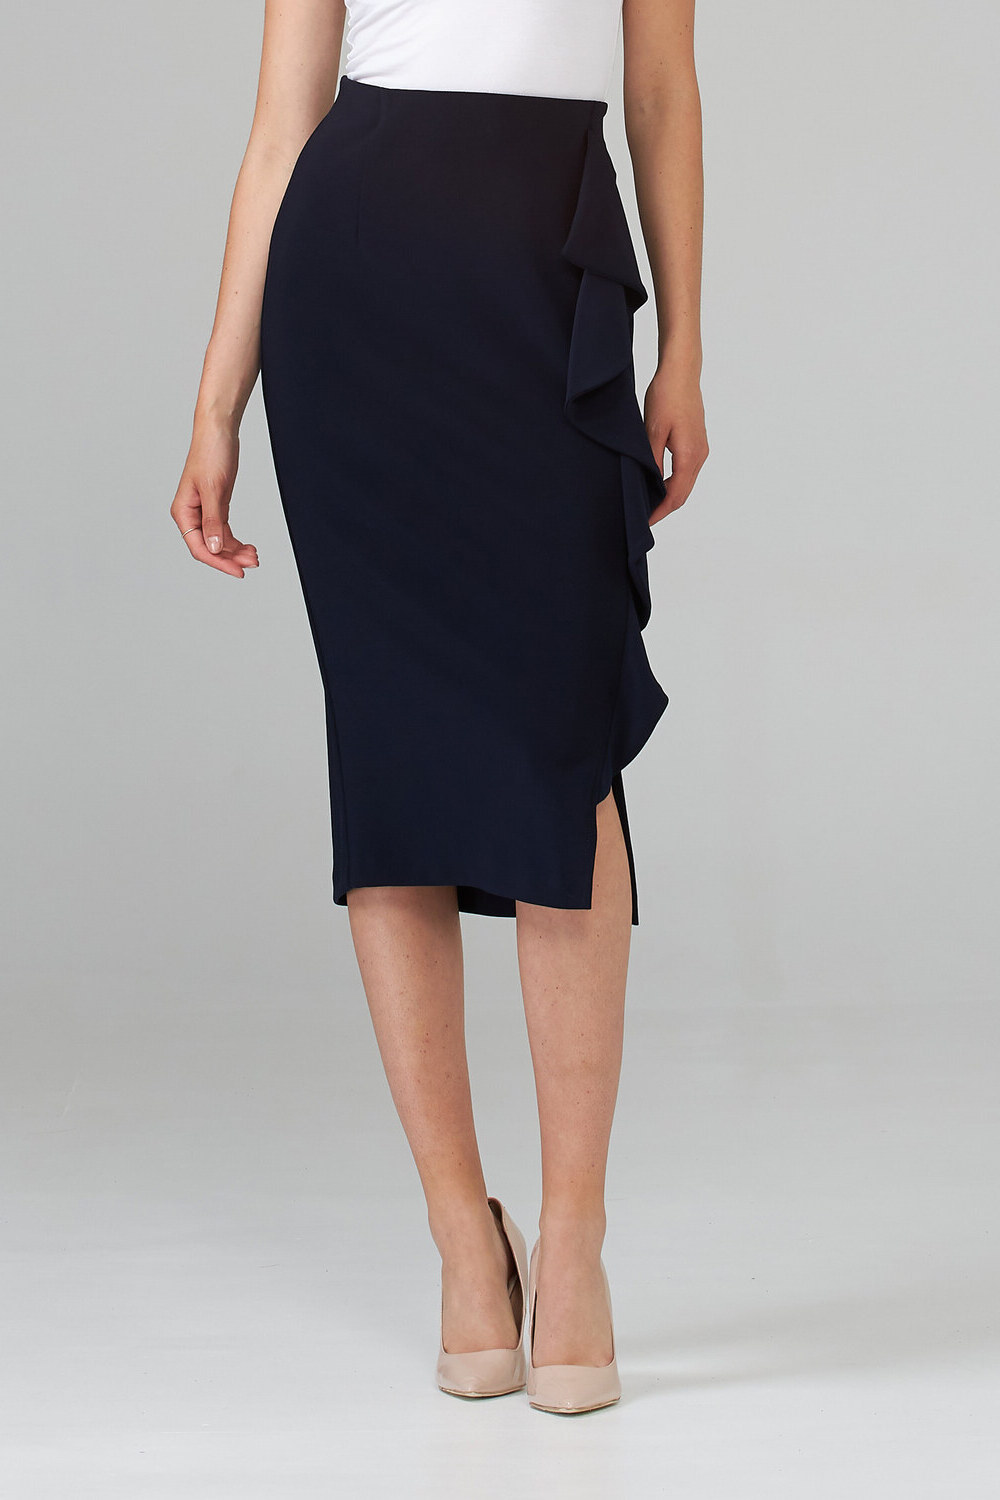 Joseph Ribkoff Skirt Style 203358. Midnight Blue 40